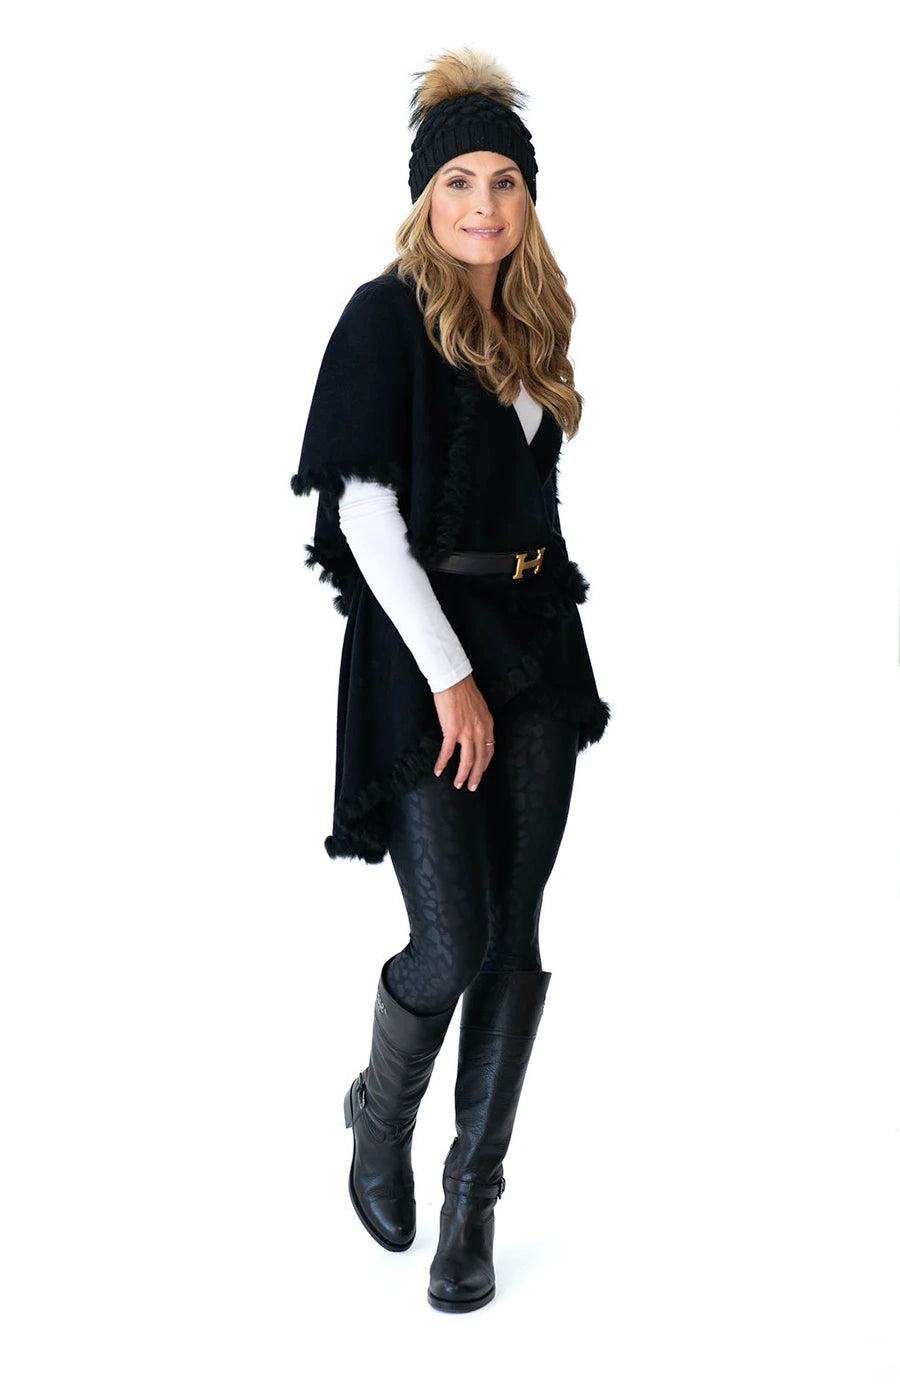 Shawl Sweater Vest in Black with Fur Trim